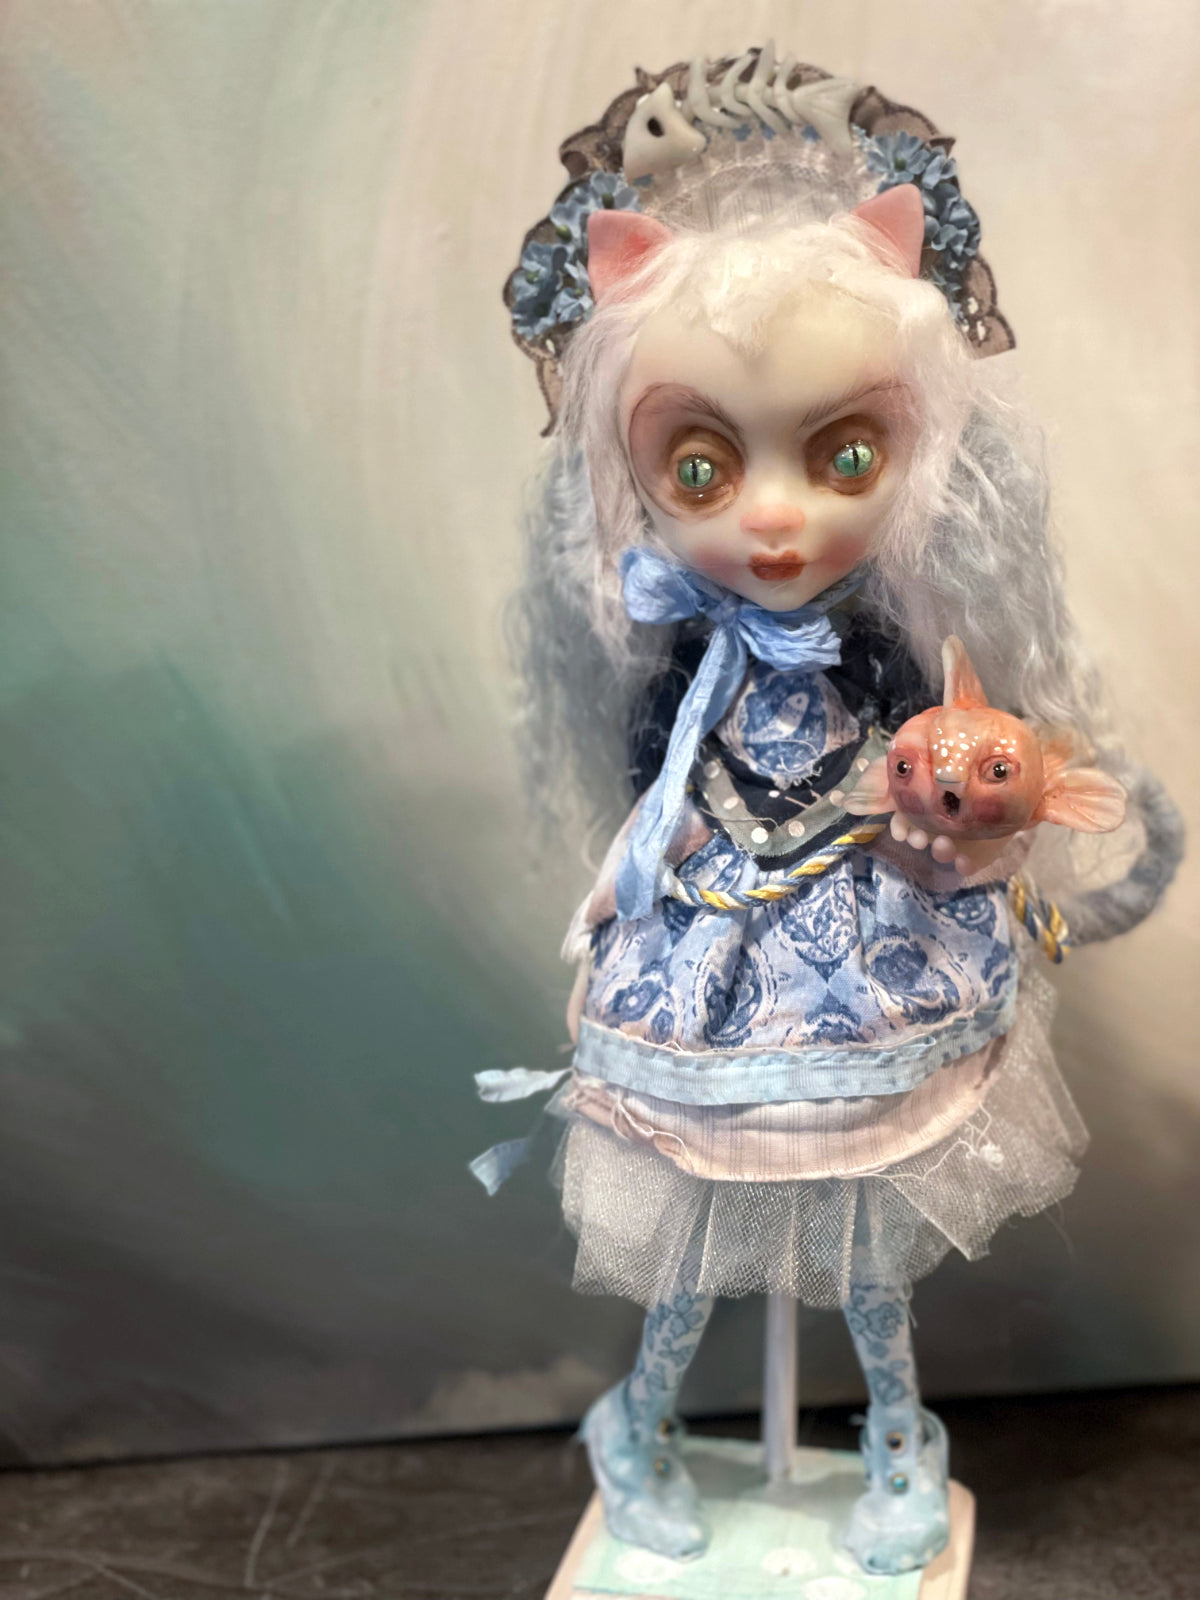 Kitty Wasabi Victorian cat Original LuLu Lancaster Art Doll